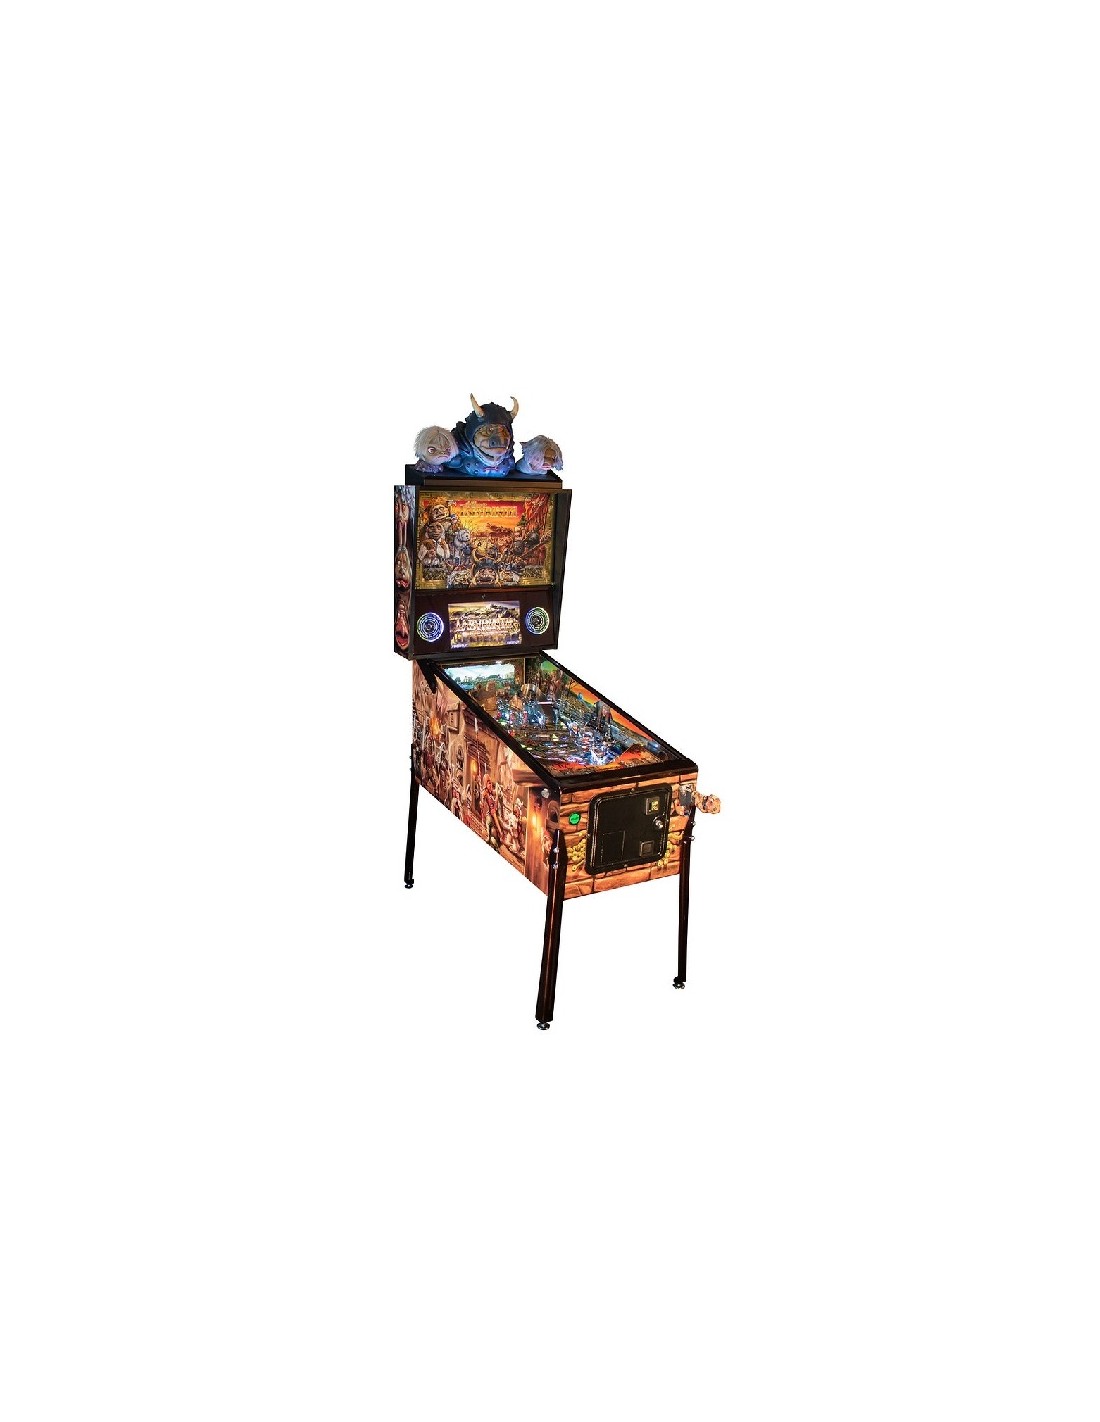 Jim Henson's Labyrinth Pinball Machine – Joystix